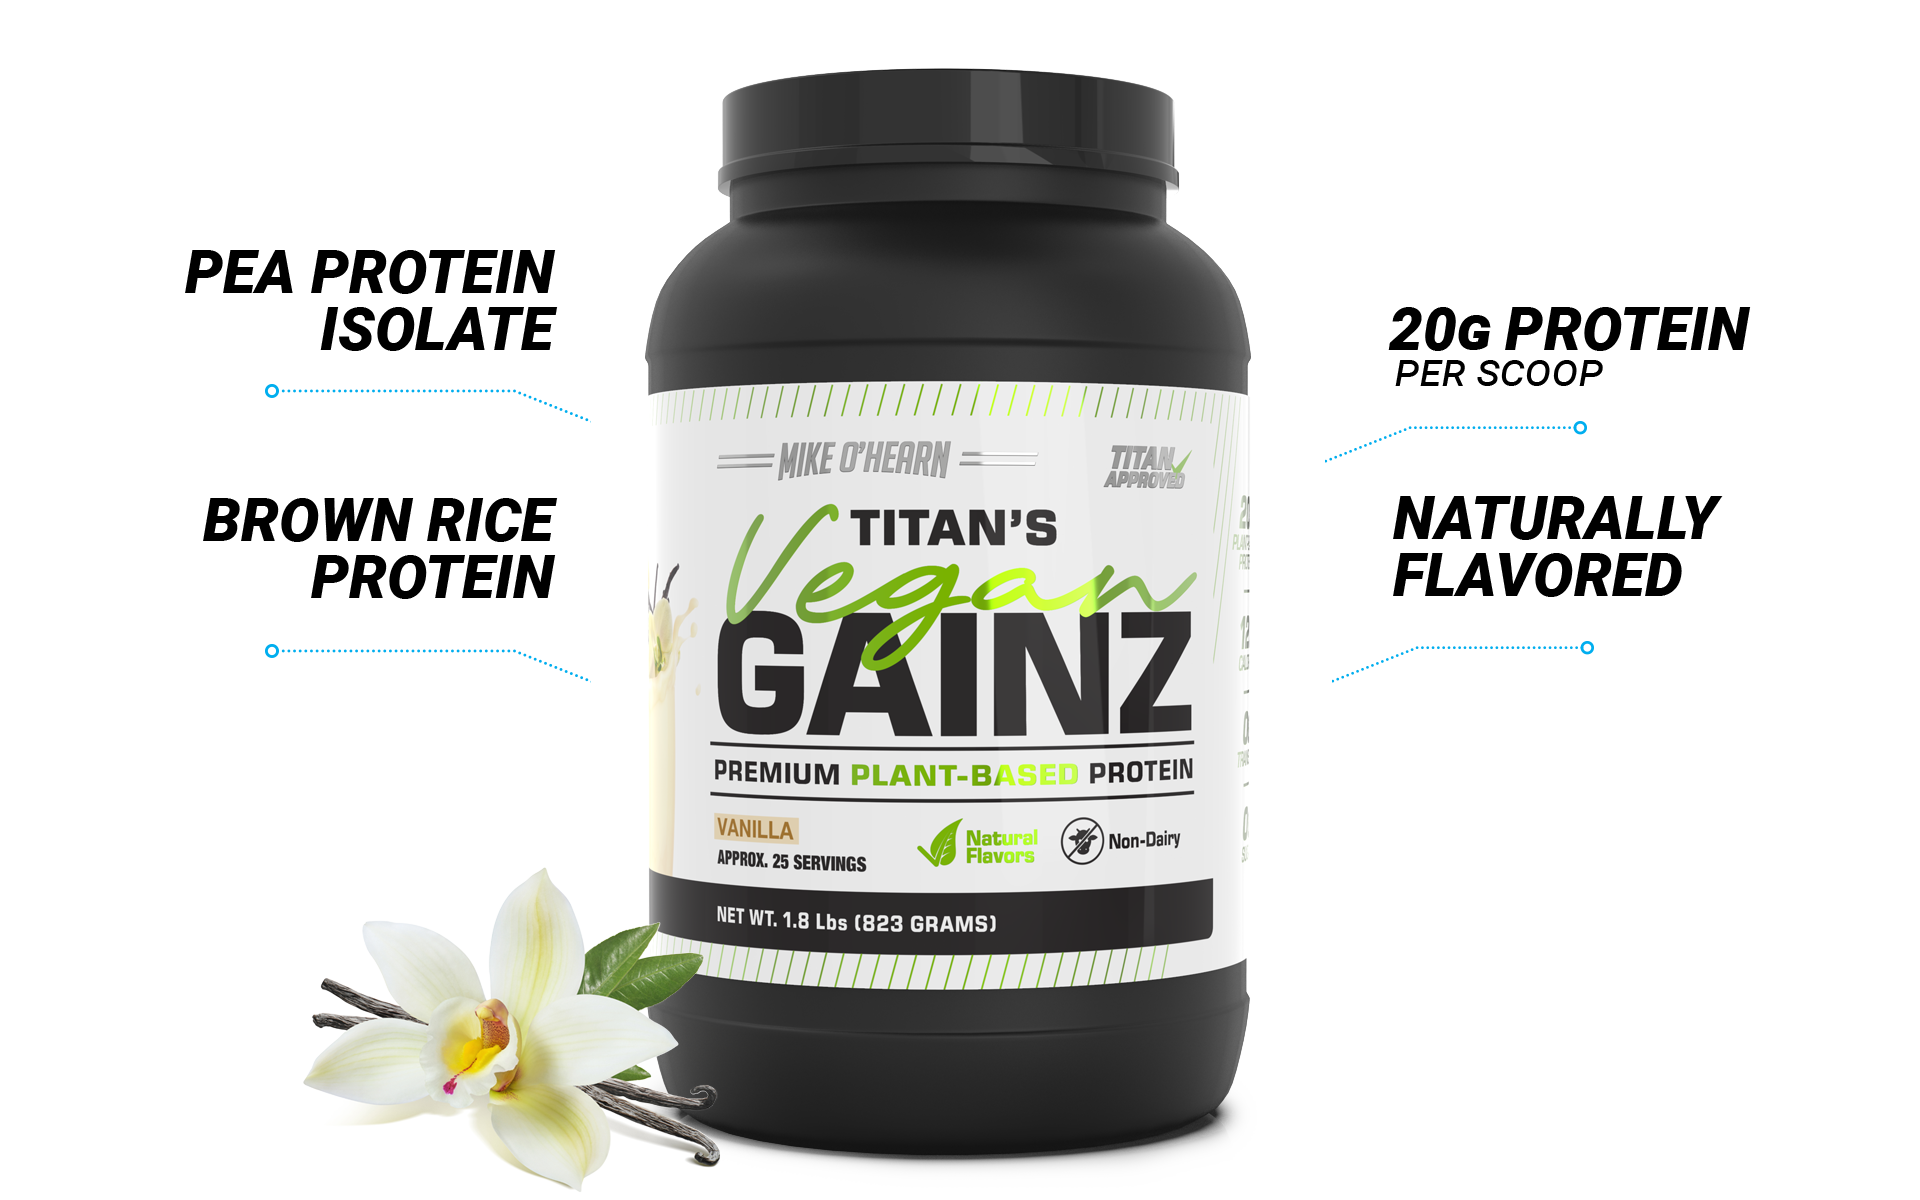 Container of Titan's Vegan Gainz protein powder with benefits 